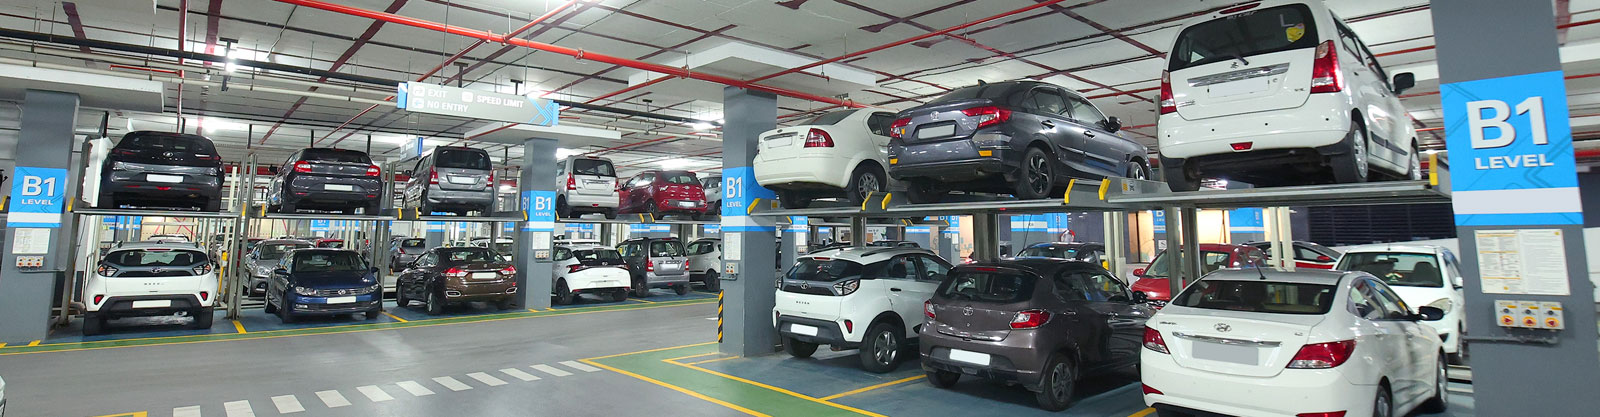 Car Parking System Manufacturers